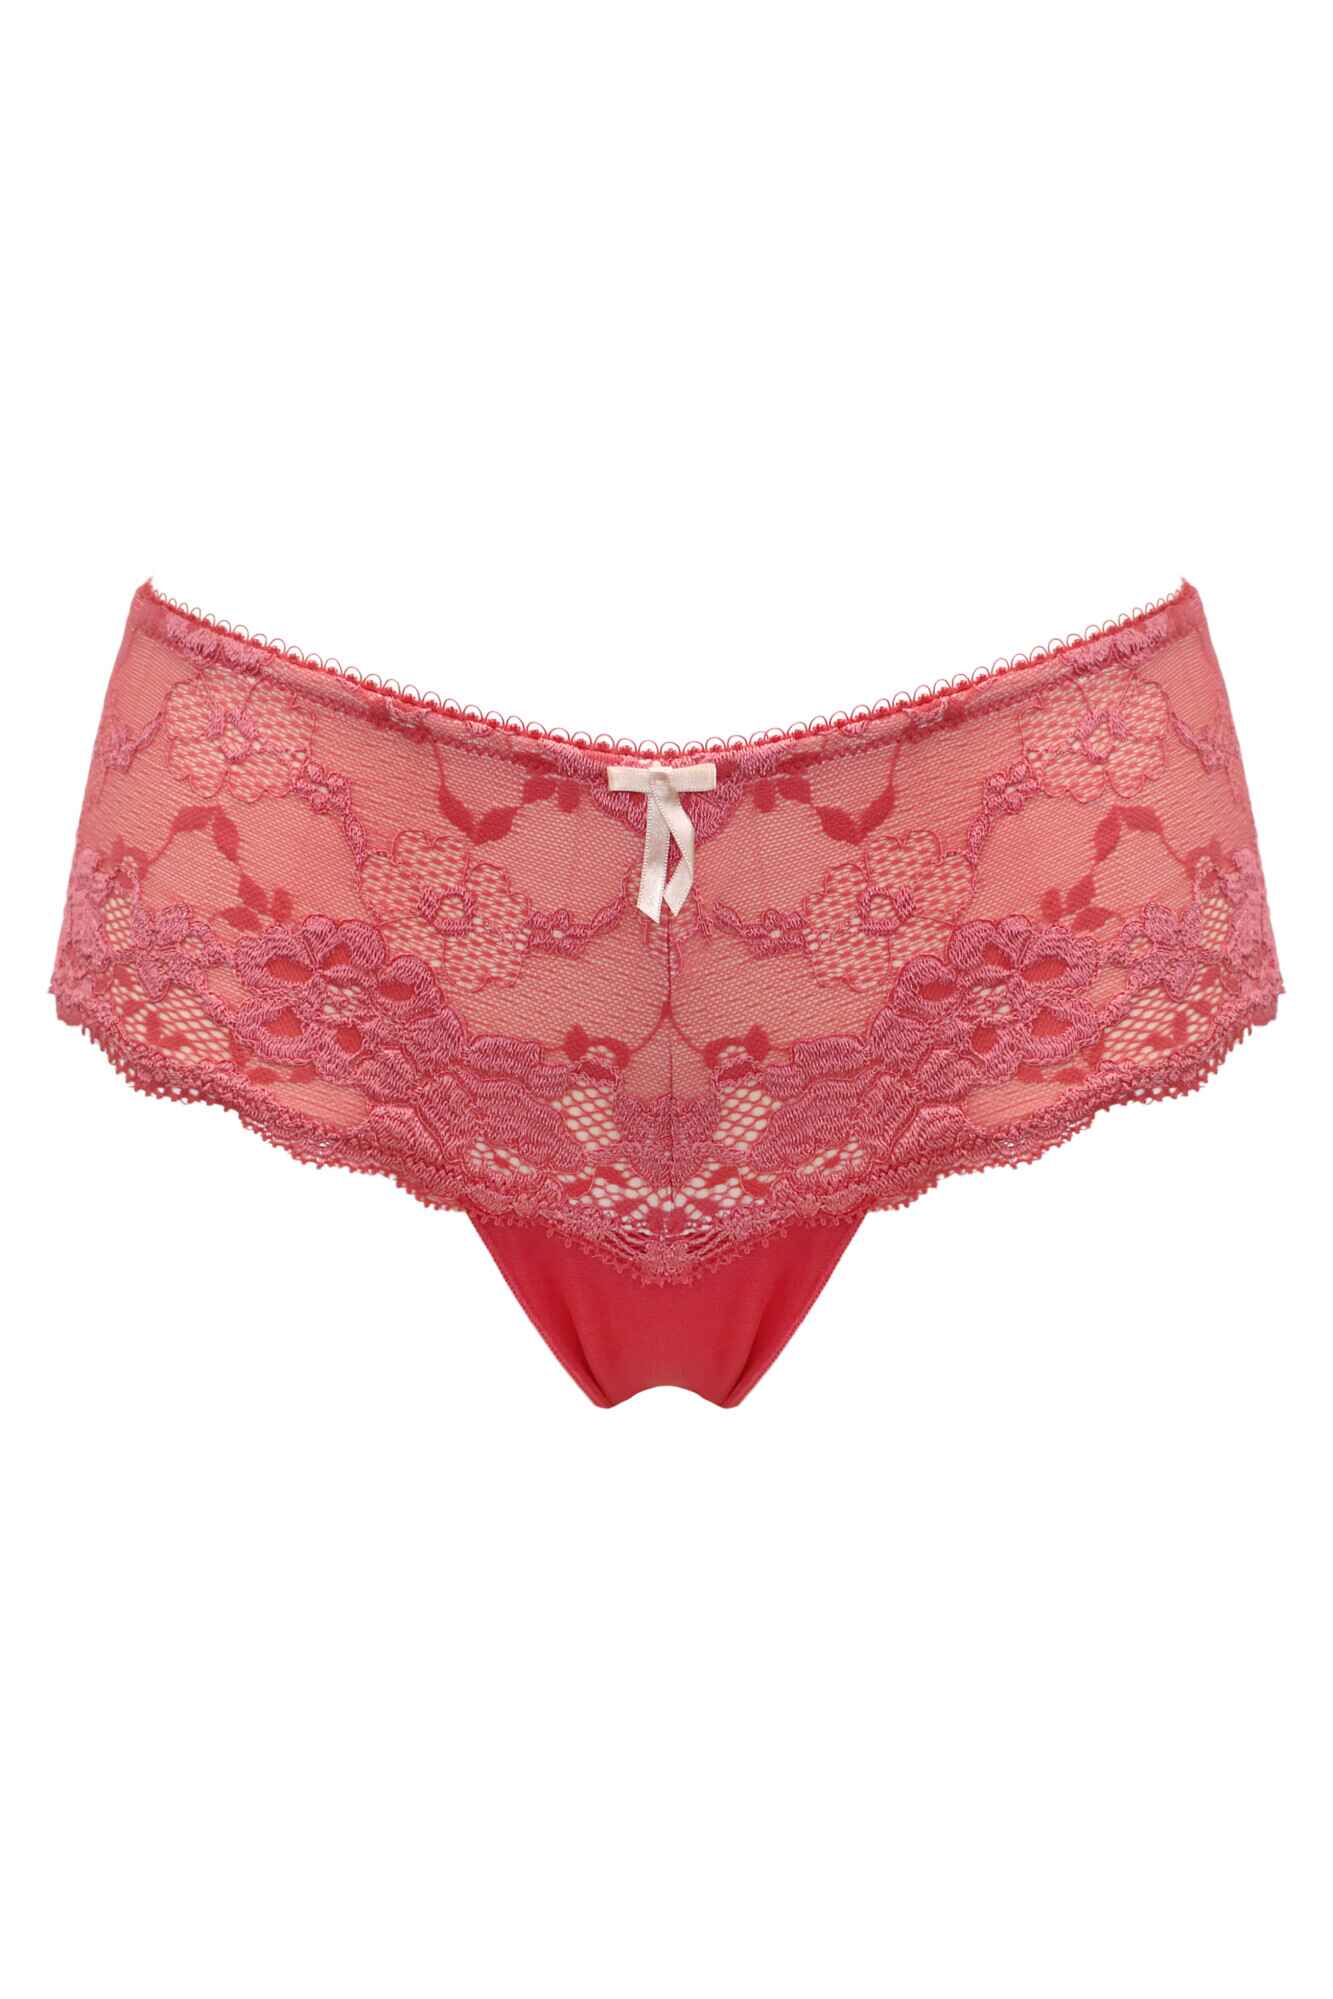 Womens Sexy Panties Short Lingerie Underwear French Knicker